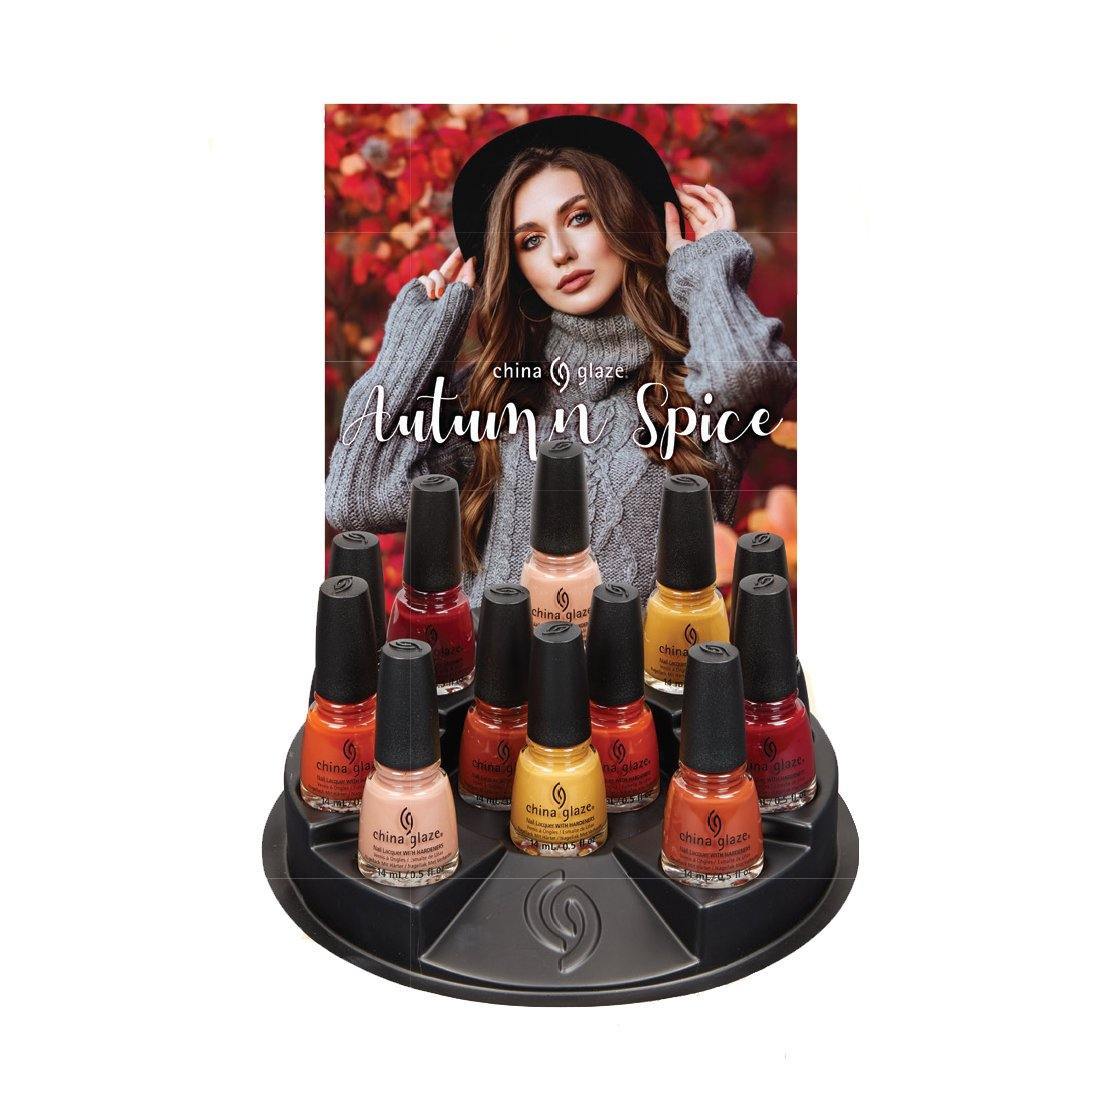 China Glaze Nail Lacquer Autumn Spice Fall 2021 Collection - Sanida Beauty